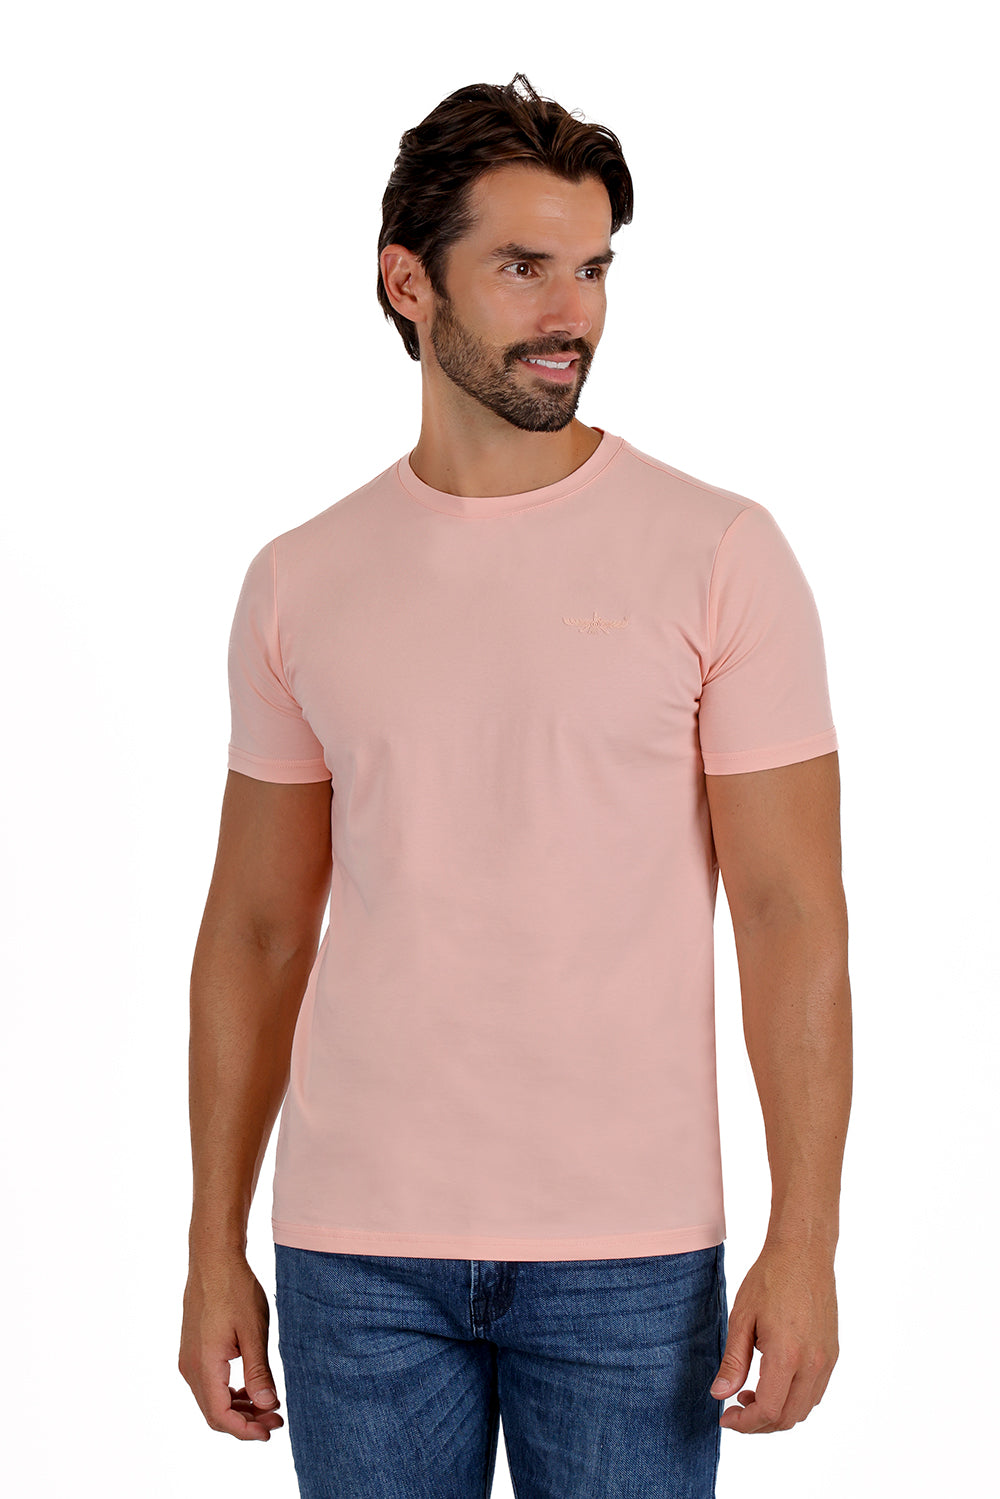 BARABAS Men's Basic Solid Color Crew-neck T-shirts ST933 Flamingo